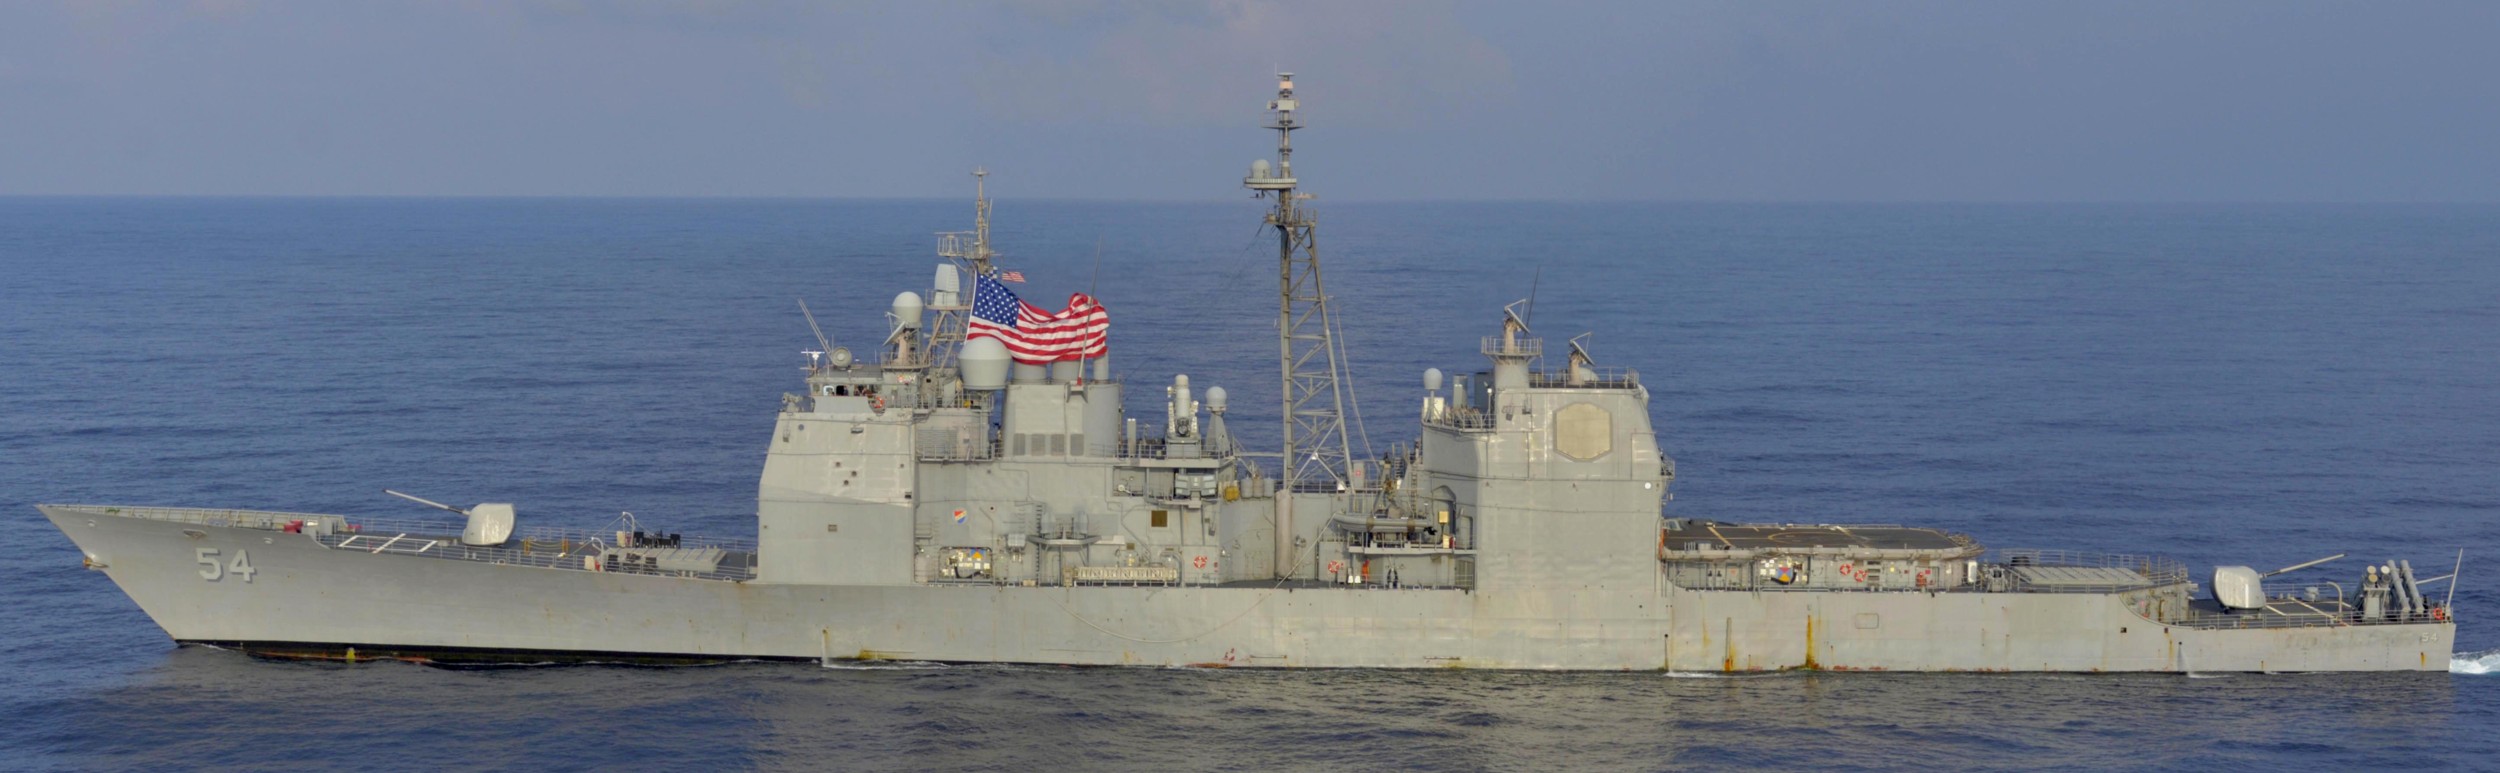 cg-54 uss antietam ticonderoga class guided missile cruiser aegis us navy south china sea 79